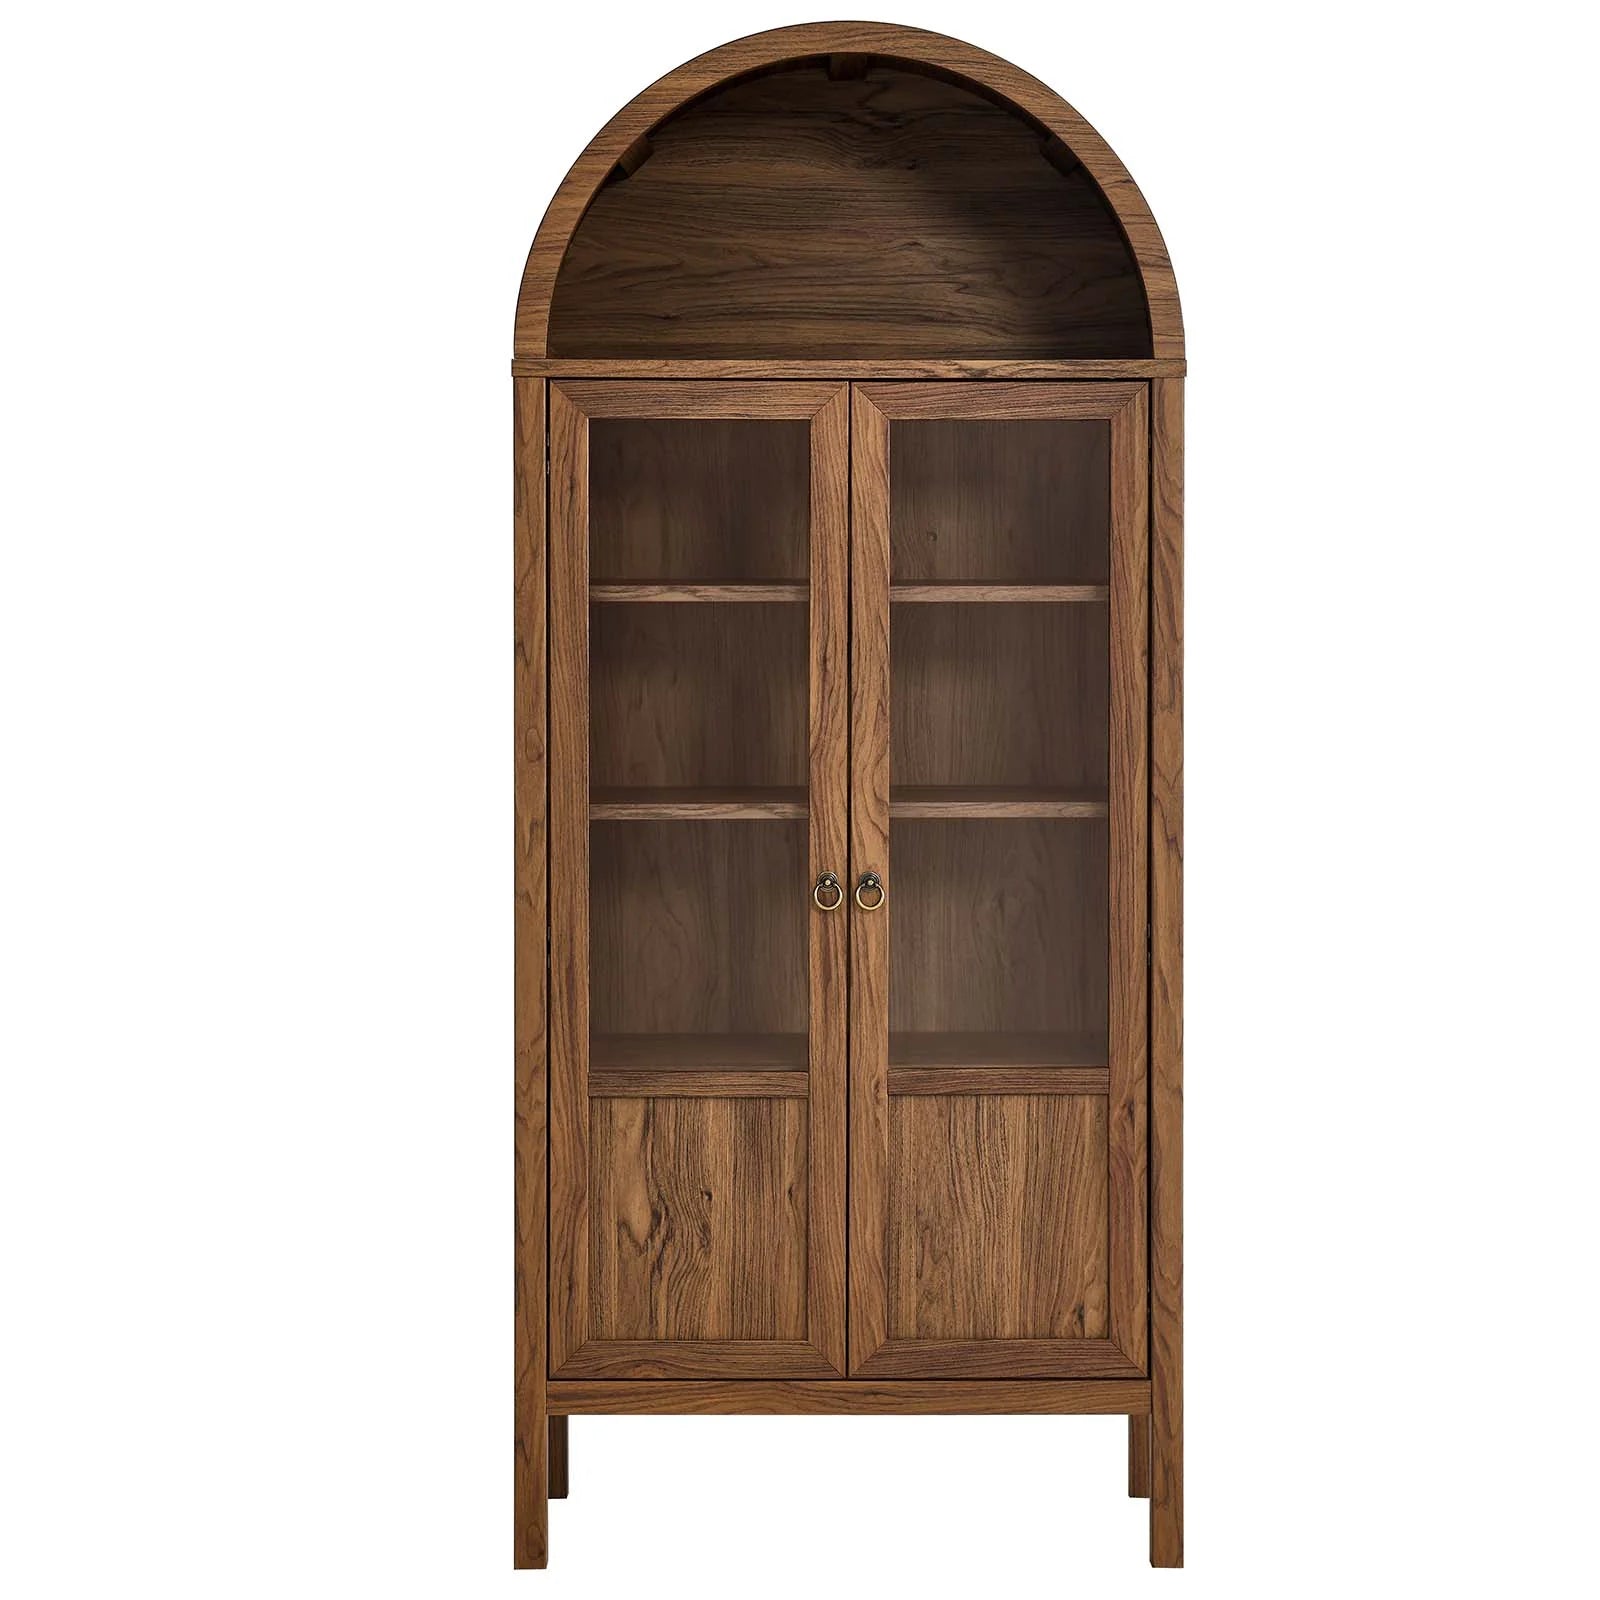 Ava Arched Storage Display Cabinet - Walnut